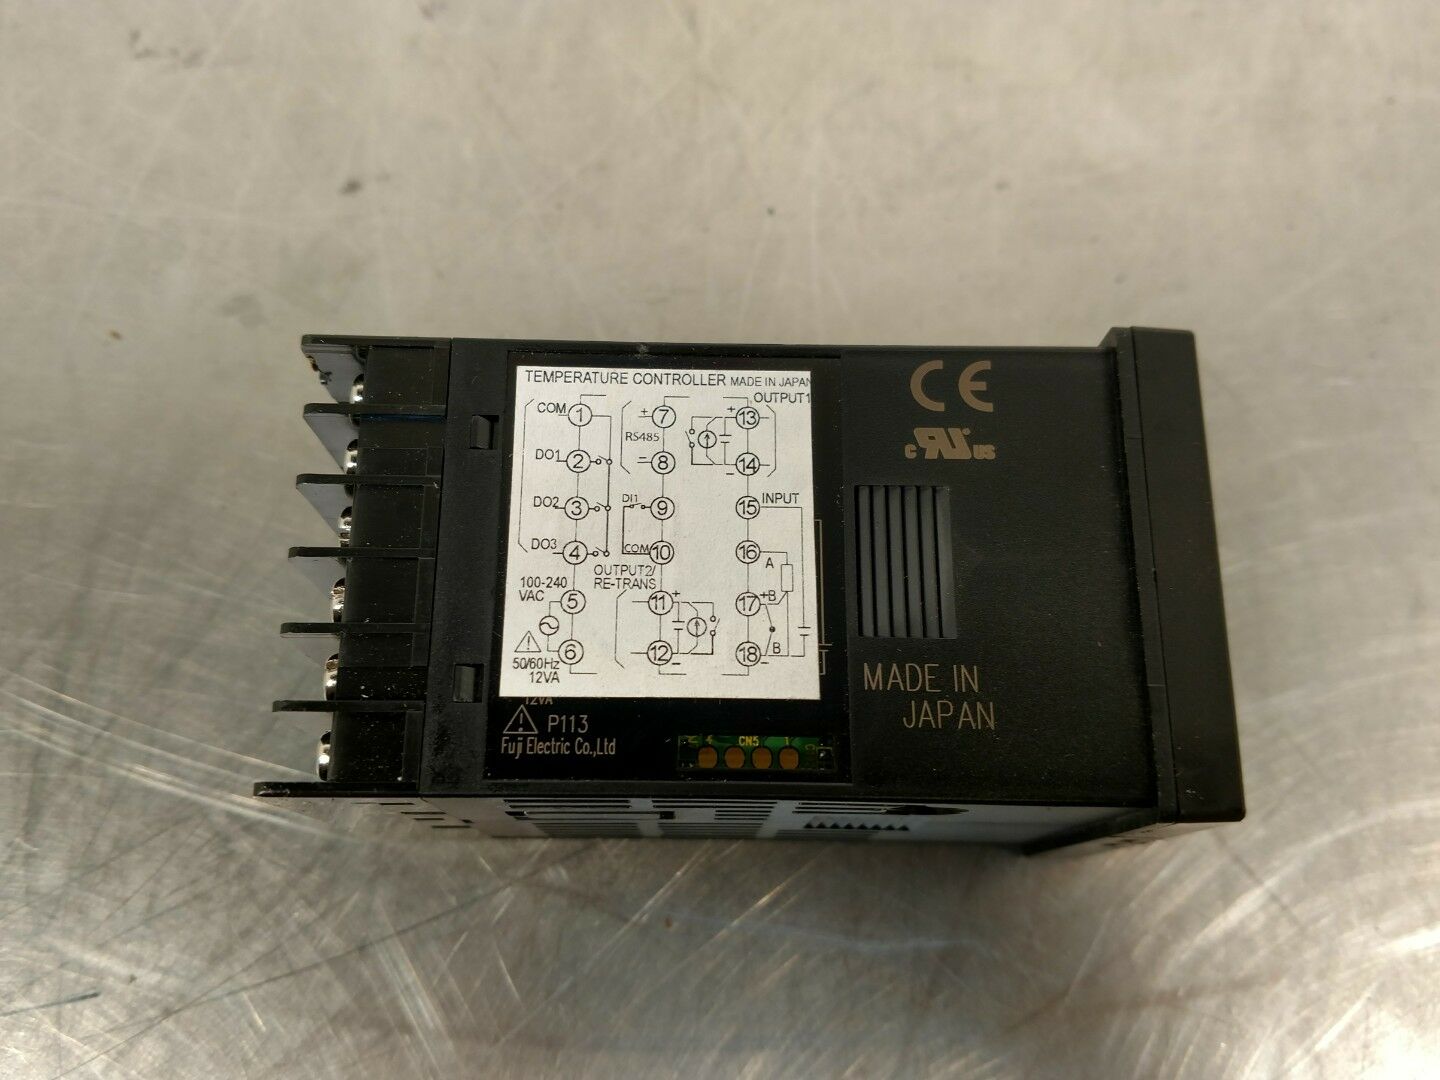 Fuji Electric PXG4AYM1-1VYA1 Temperature Controller 2D